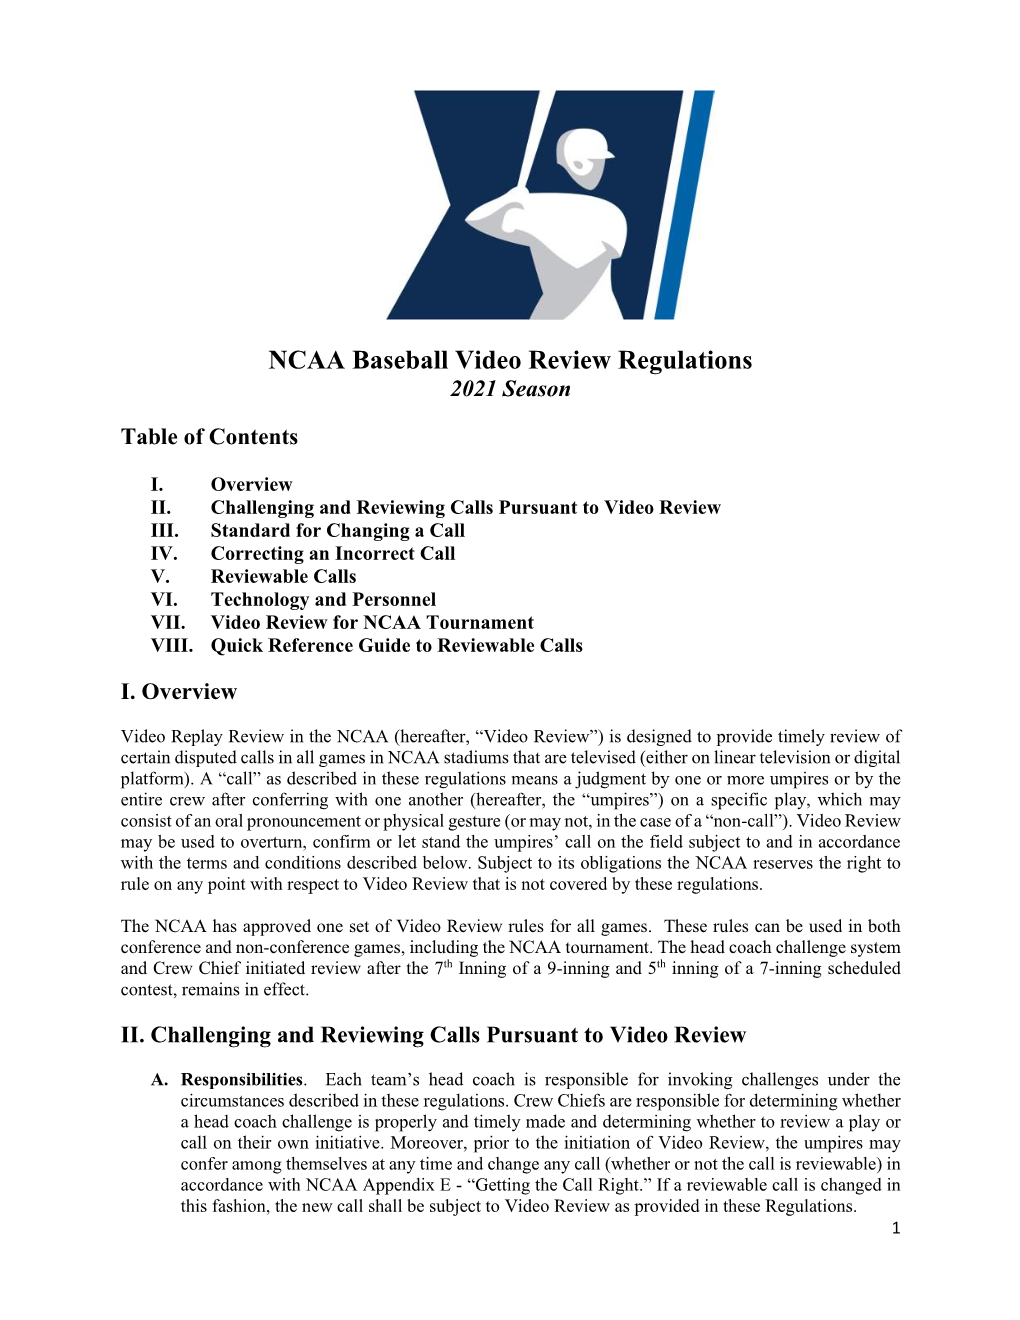 2021 NCAA Video Review Regulations